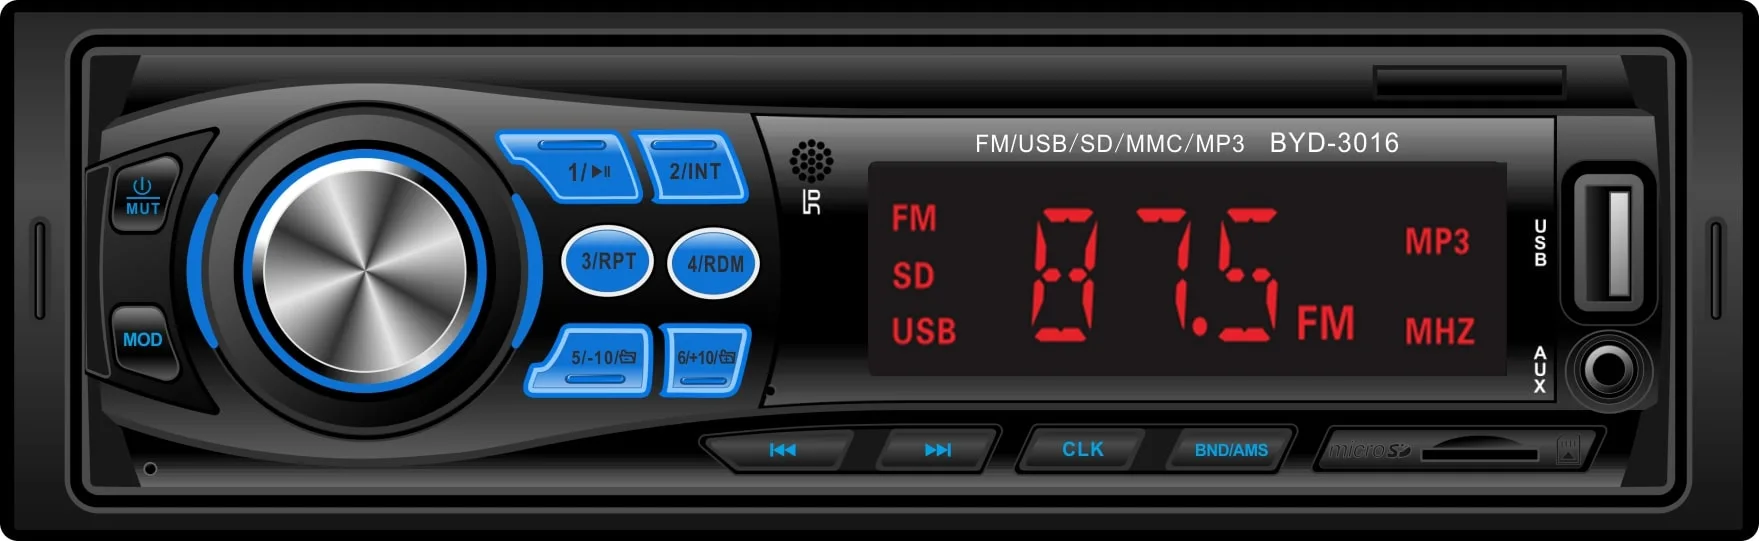 Auto Elektrik 1 DIN MP3 Audio-Player-System Radio